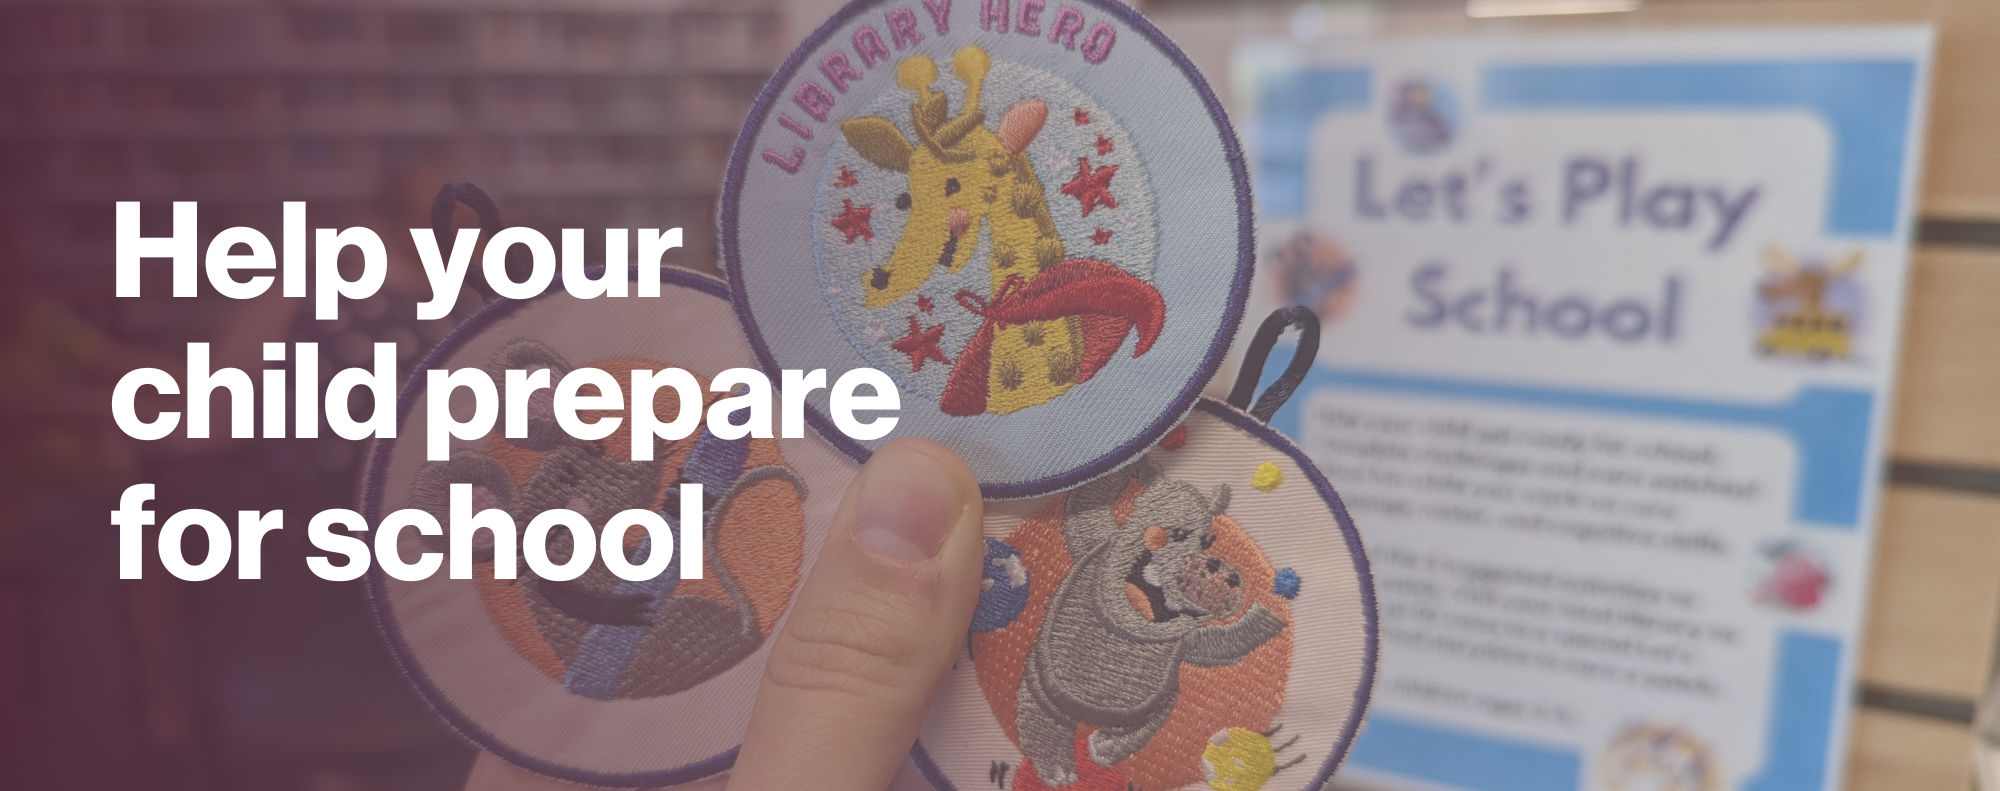 Help your child prepare for school